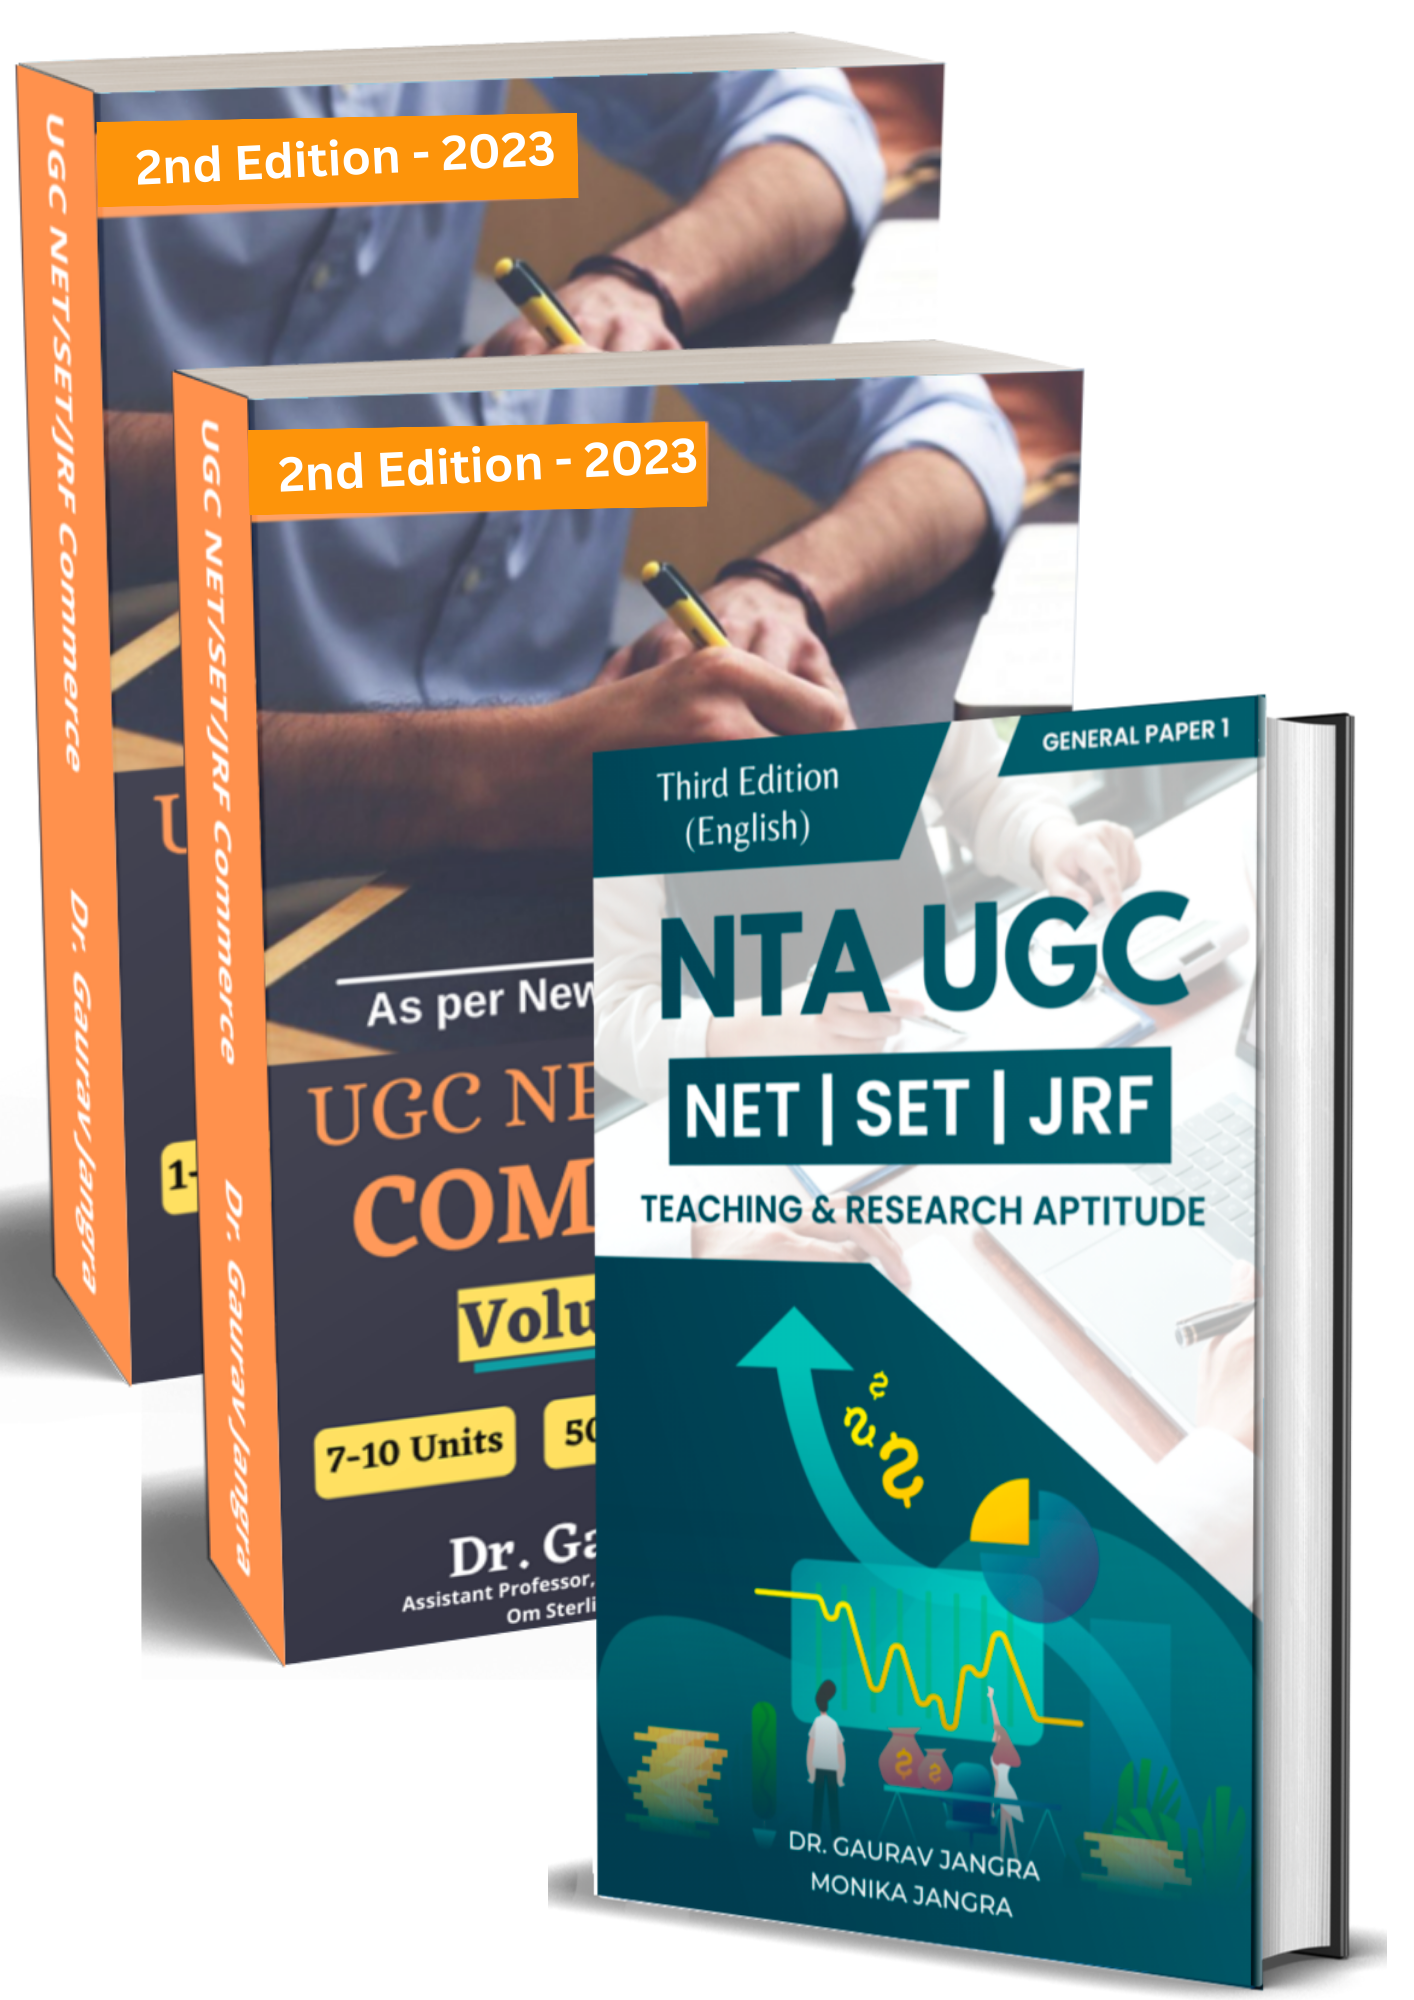 UGC NET Paper 1 and UGC NET Paper 2 Commerce Combo Easy Notes 4U Online Study Material UGC NET PDF Notes eBooks Books Paper 1 2 commerce Management Academy